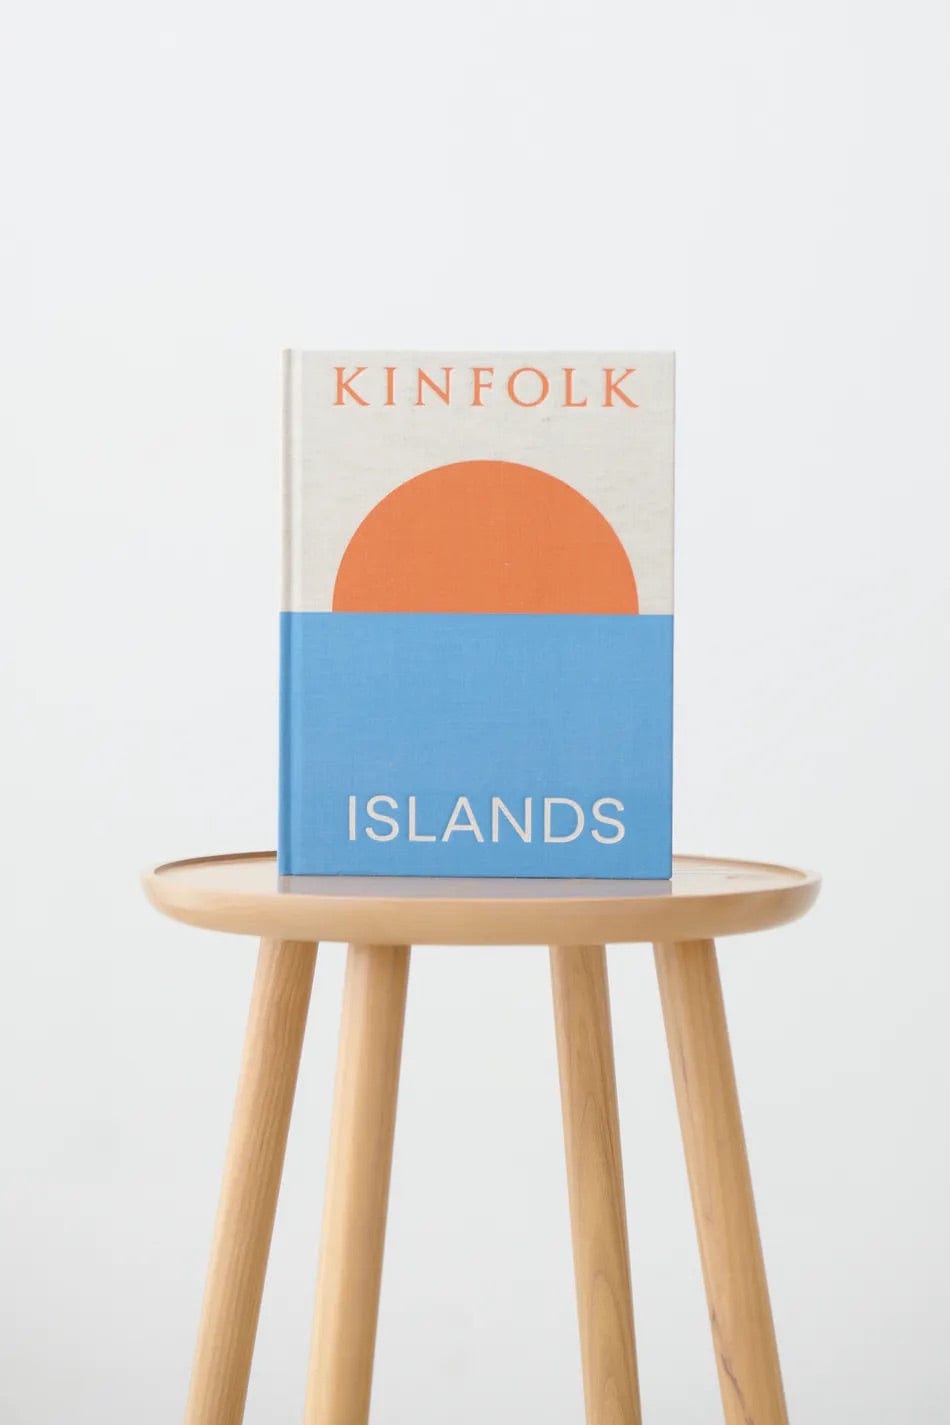 Hintsdeco Books Βιβλίο Τέχνης Βιβλίο Τέχνης Kinfolk Islands Πορτοκαλί/Γαλάζιο 20,5×2,5×27,5cm cm Hintsdeco